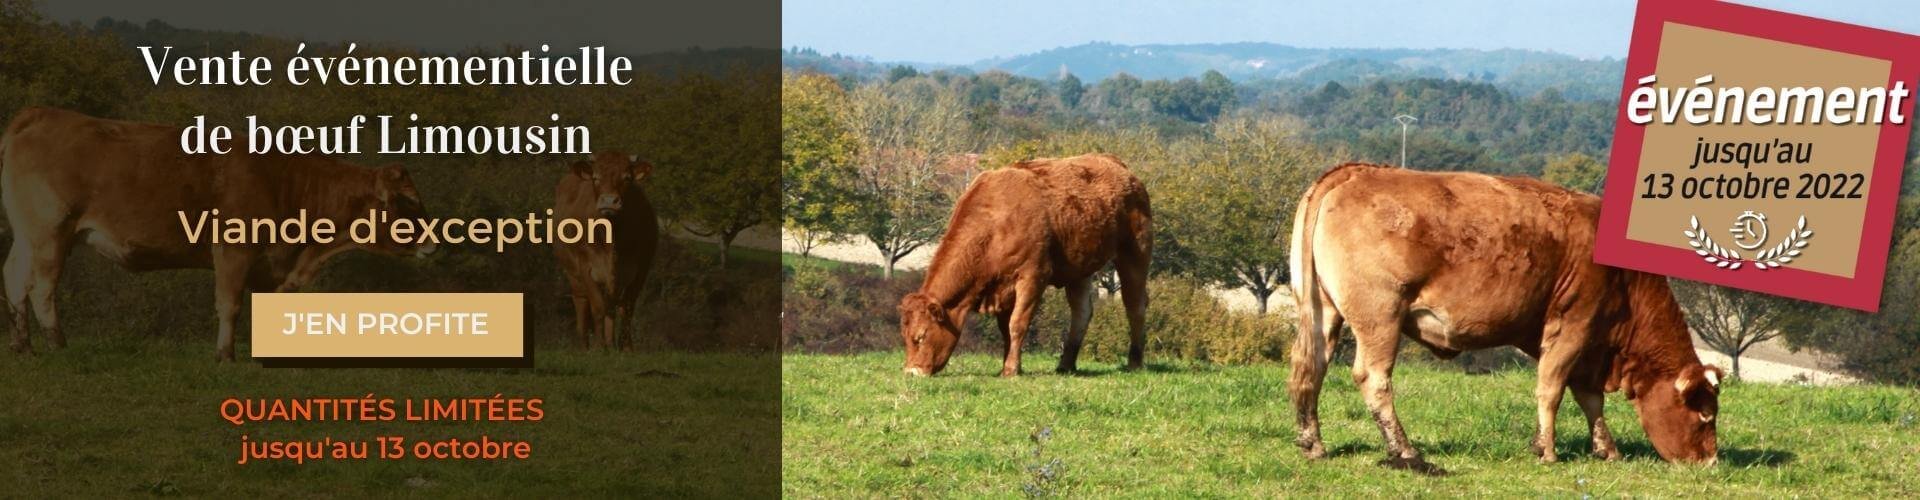 Le boeuf Limousin